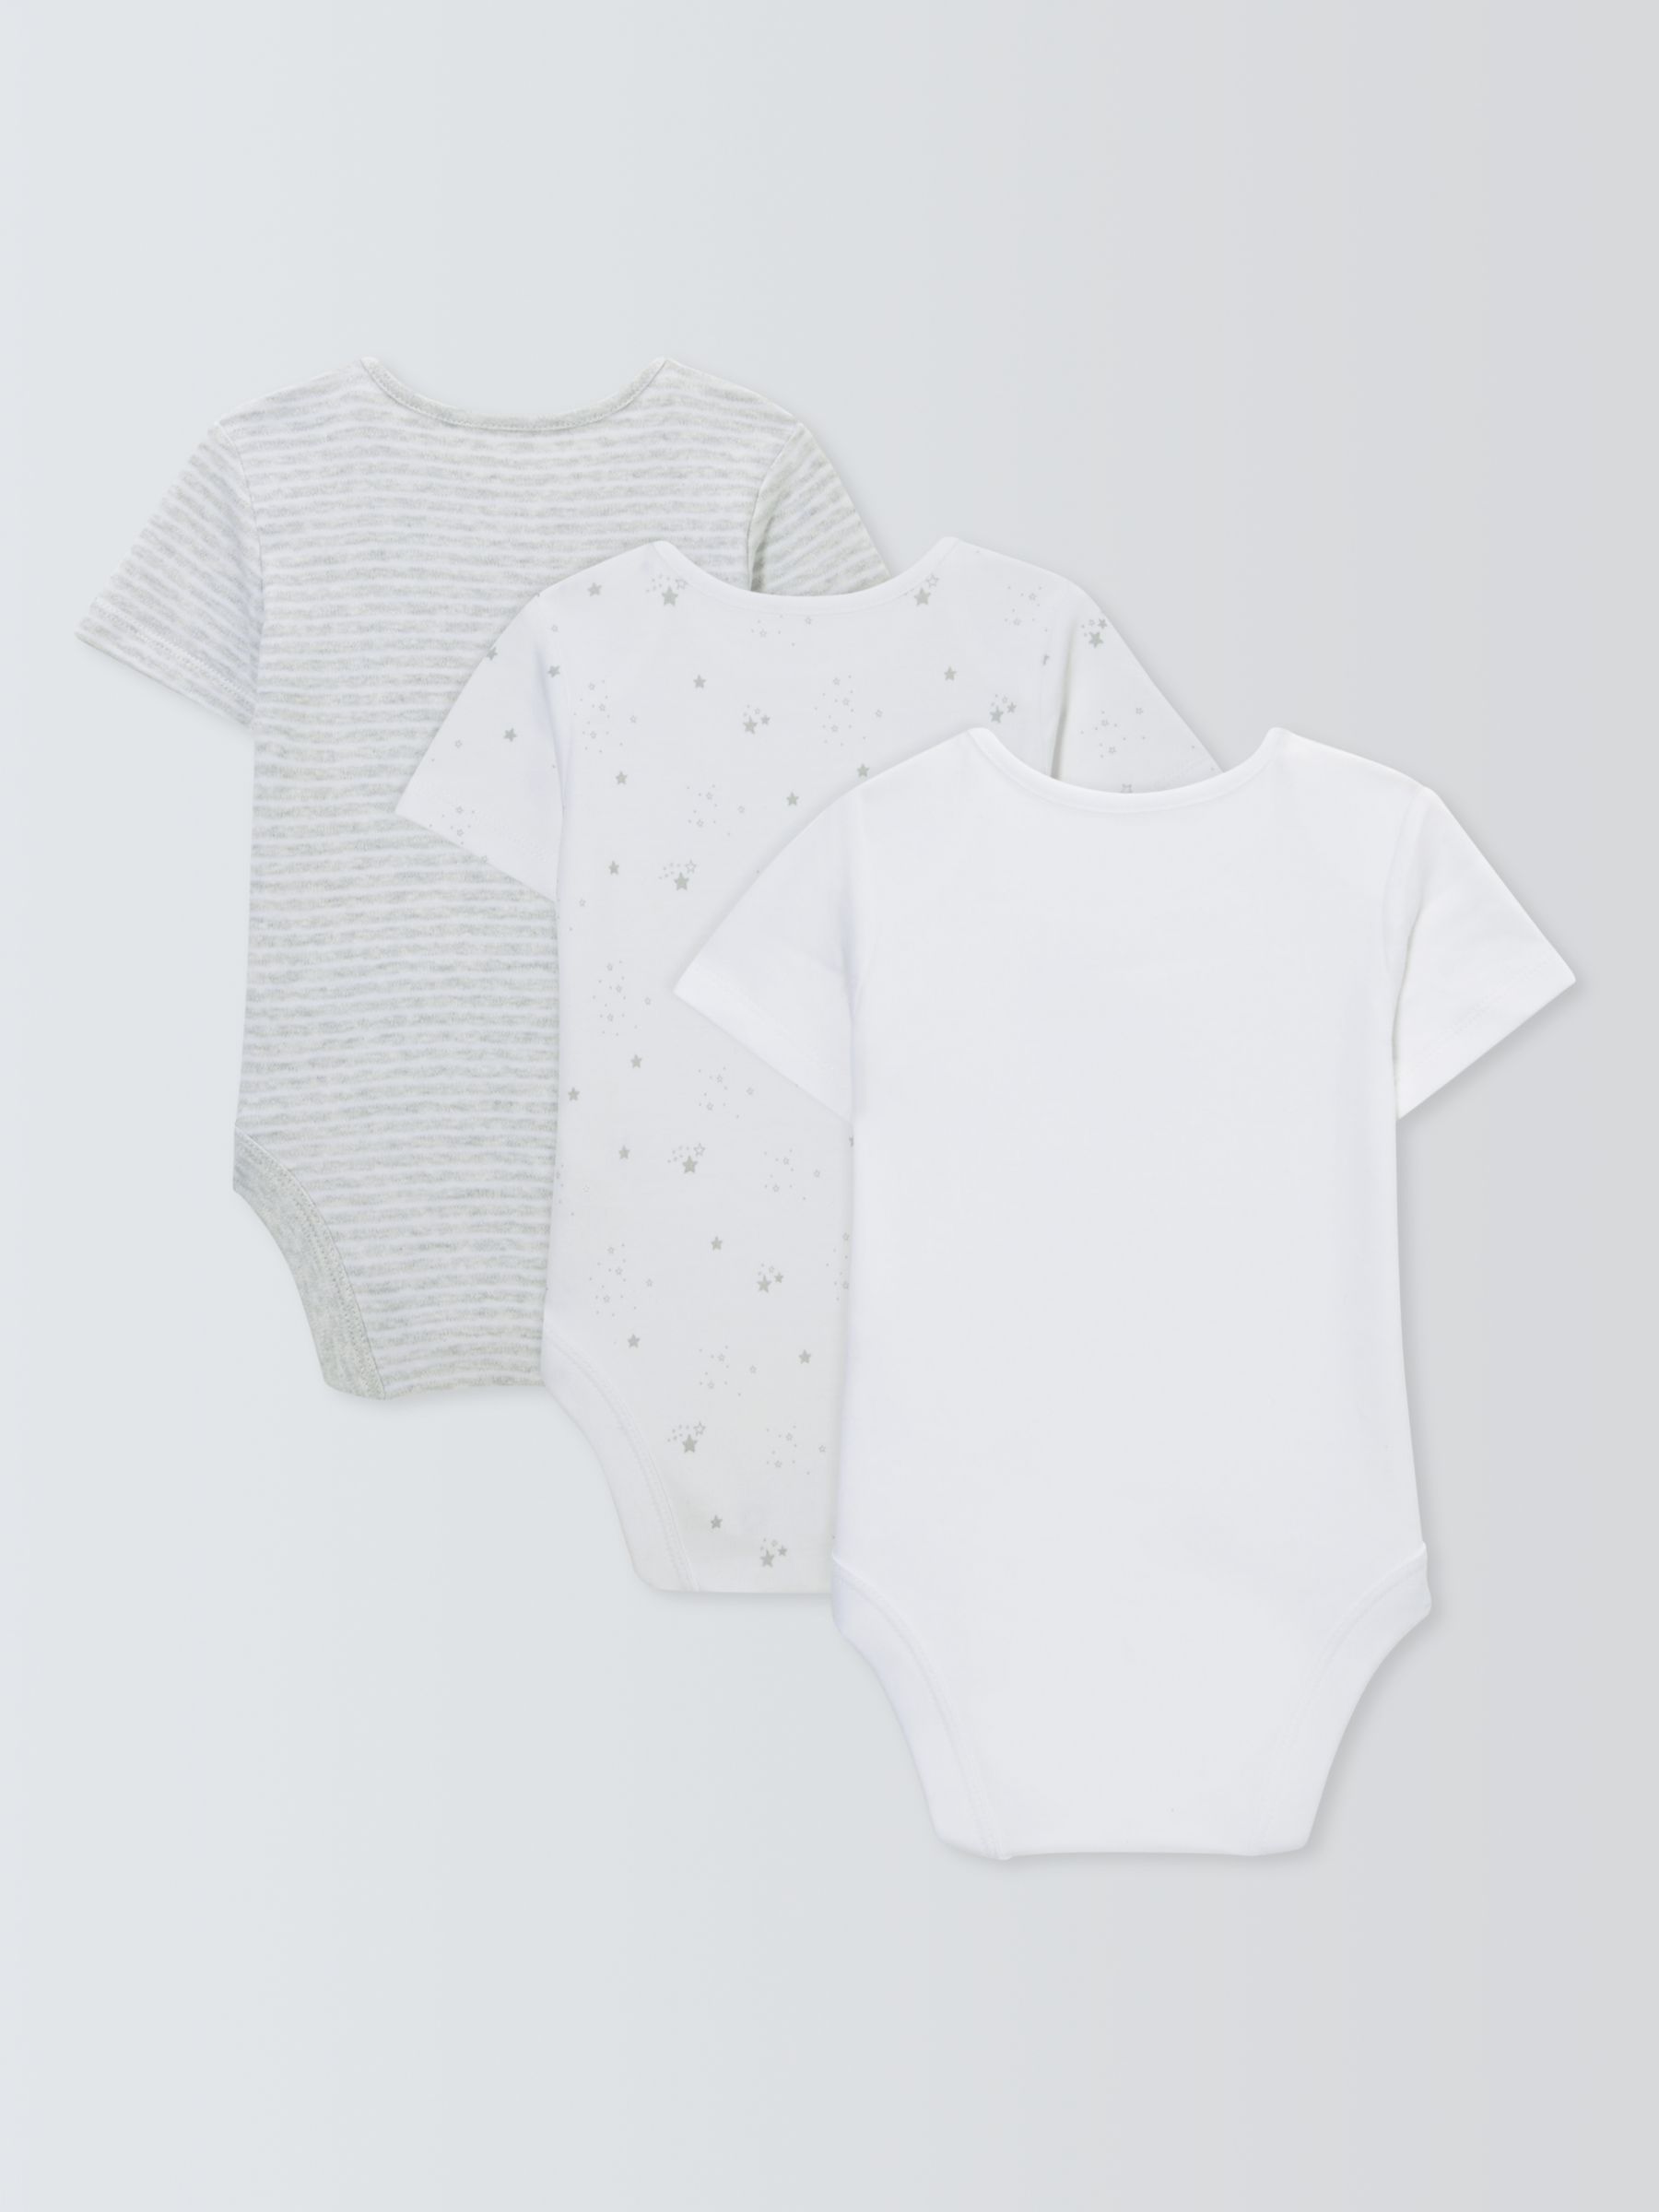 Buy John Lewis Baby Cotton Star Print Bodysuits, Pack of 3, White Online at johnlewis.com